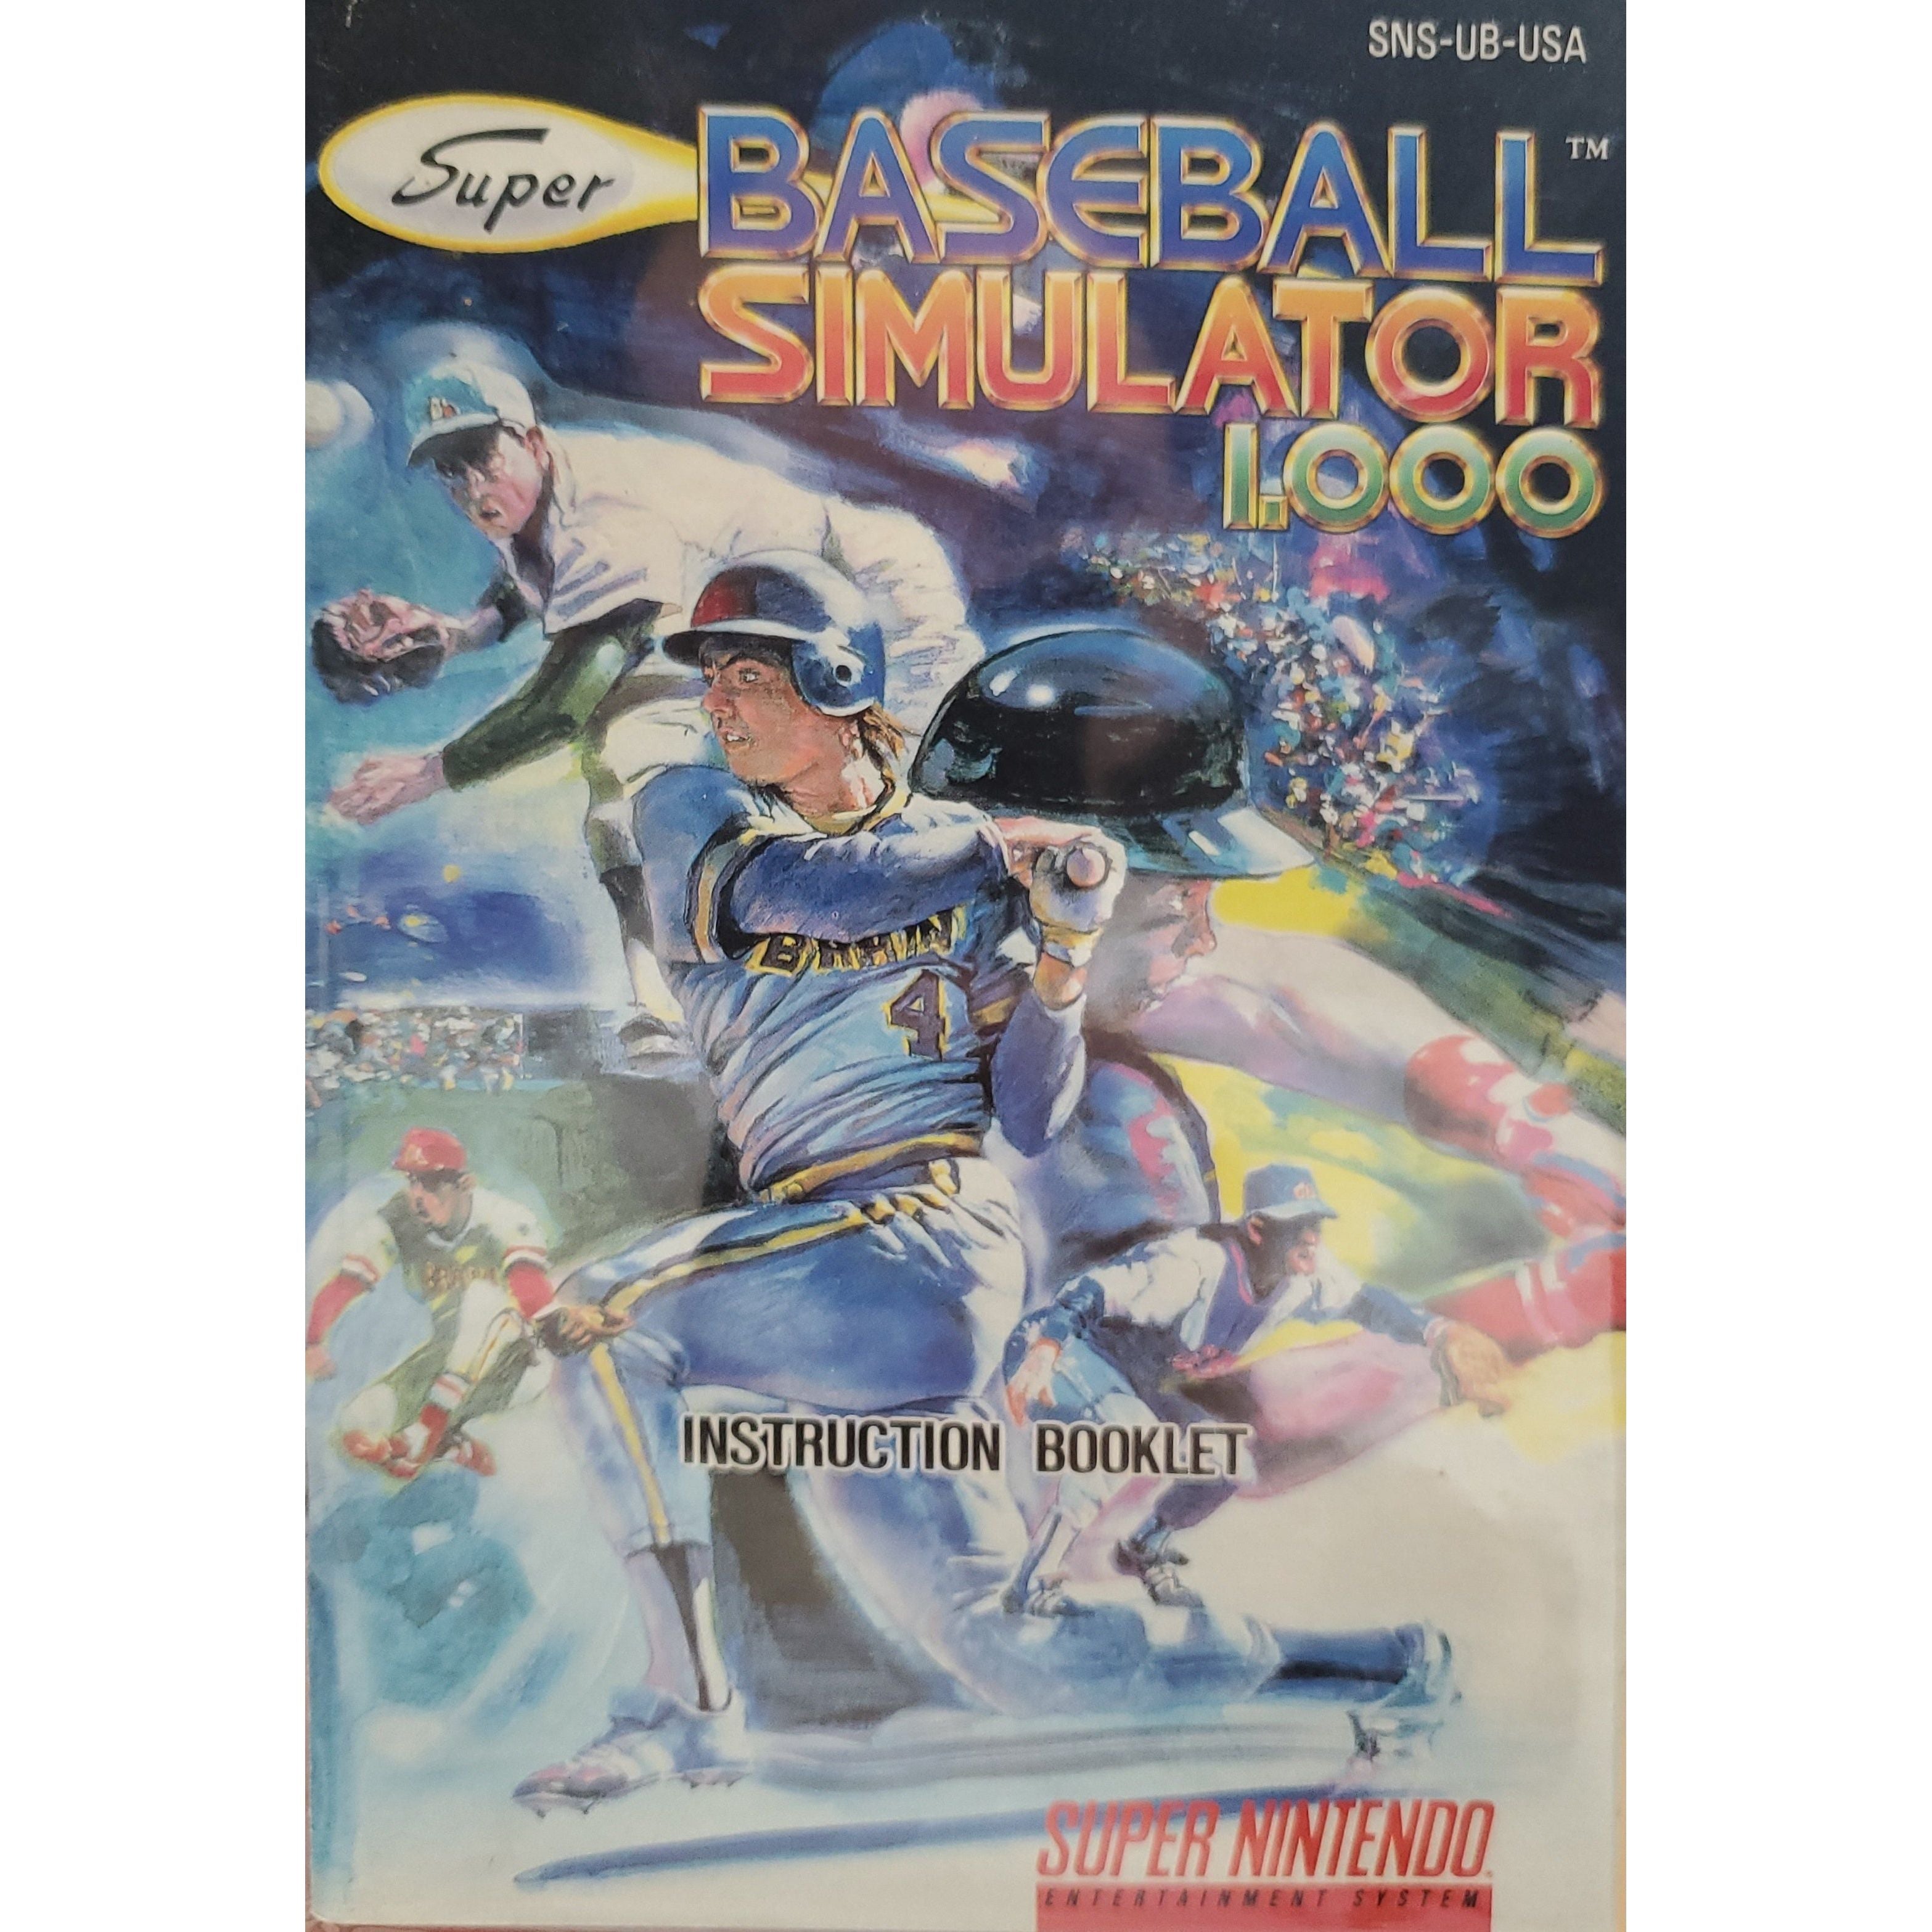 SNES - Super Baseball Simulator 1000 (Manuel)